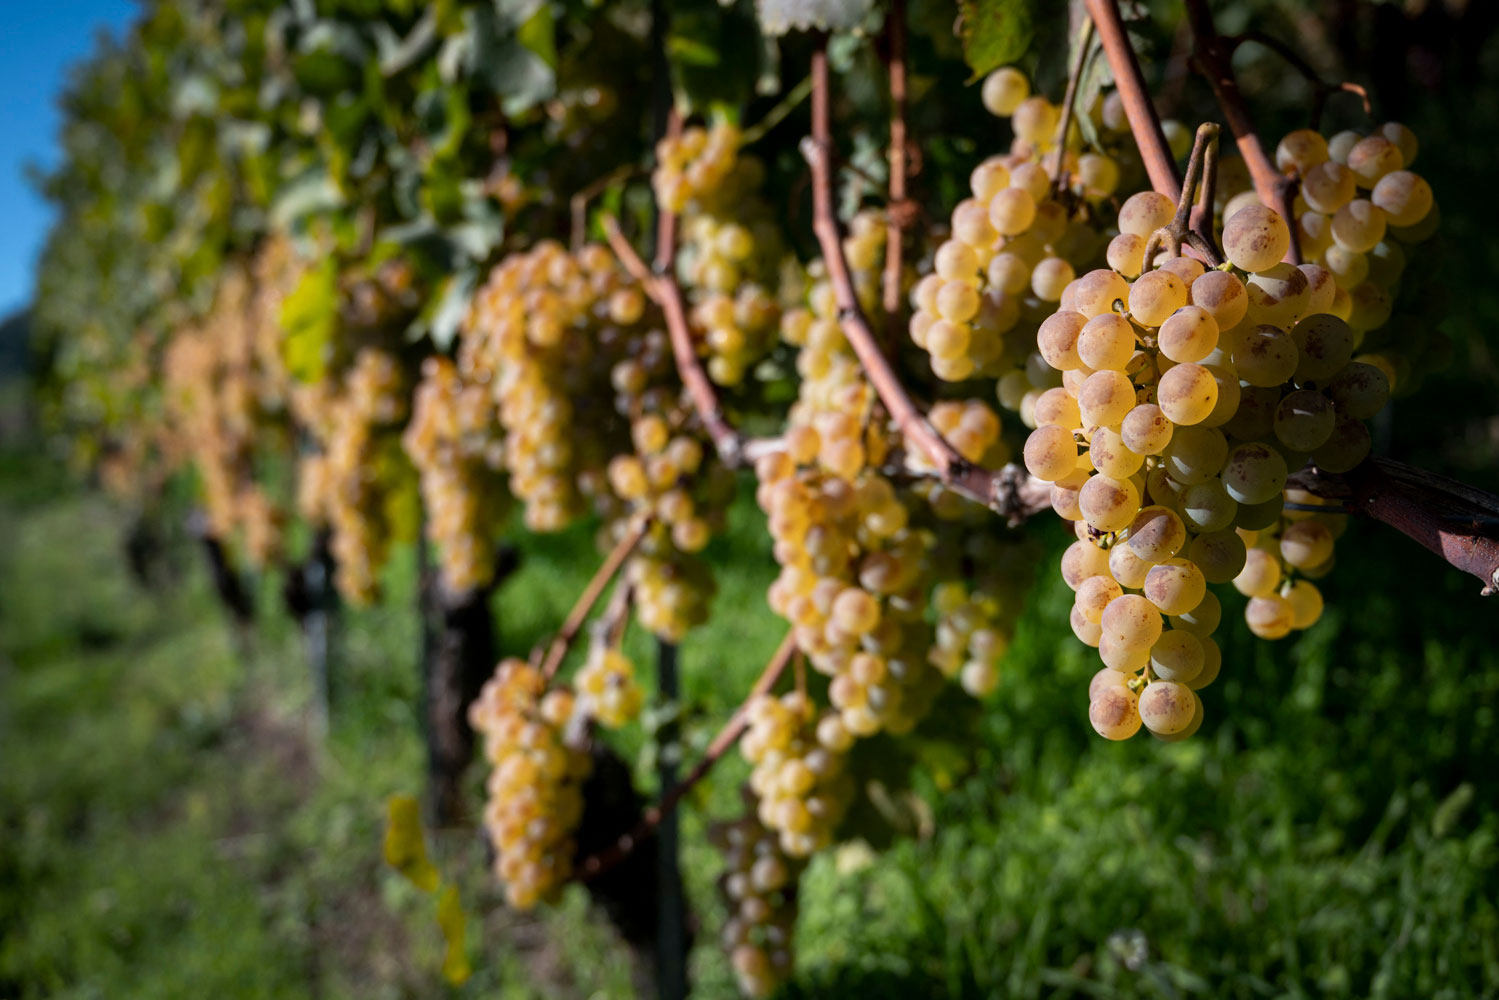 Grapes ready for harvest at a vineyard&nbsp;overlooking Lake Geneva last September.